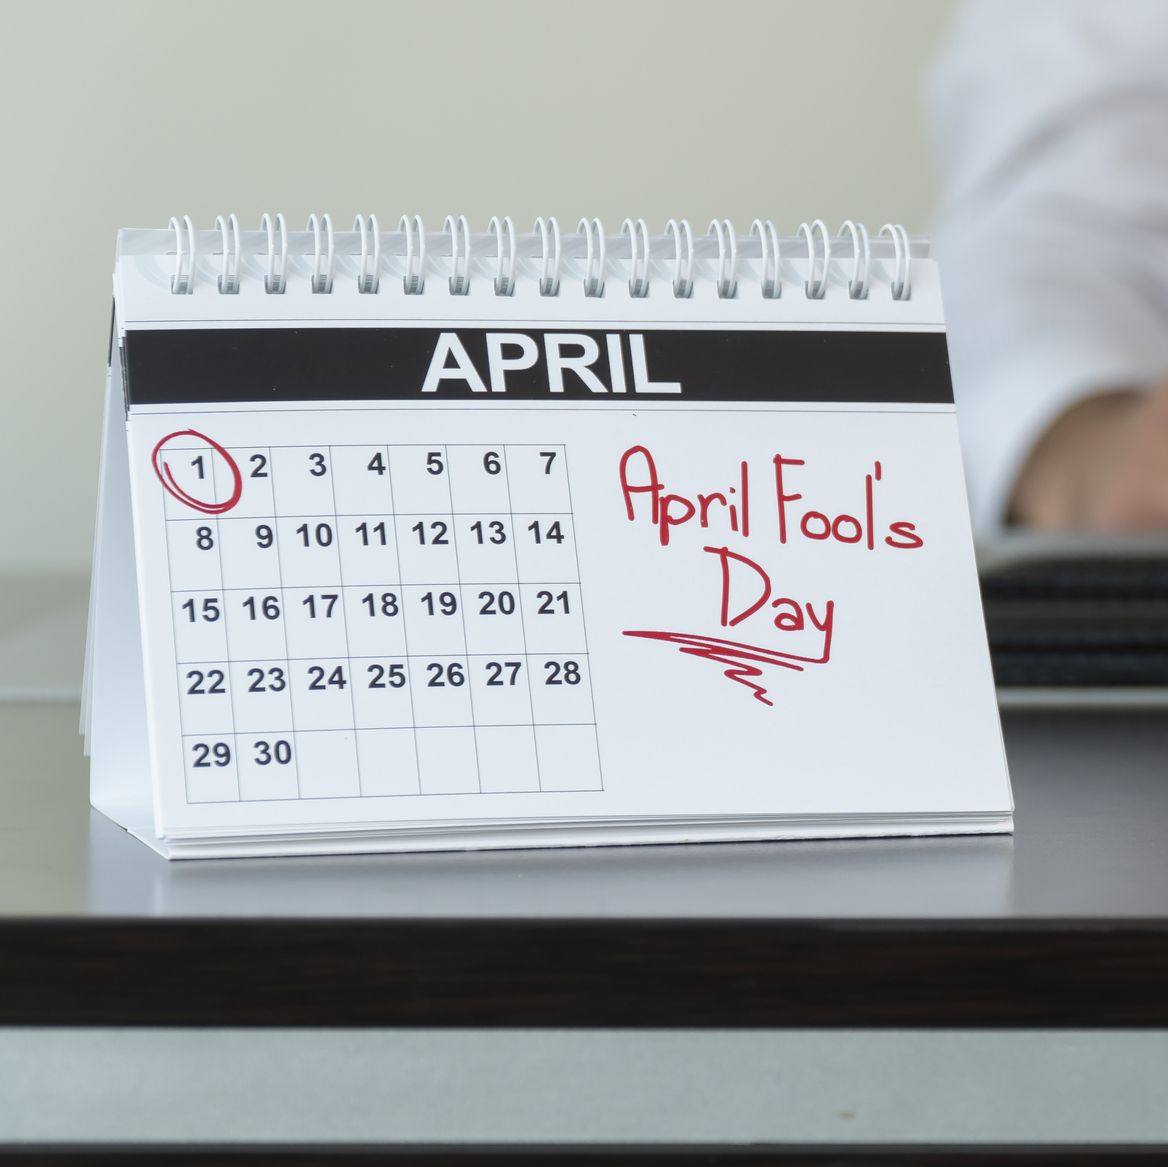 12 Best Office April Fool's Pranks - Harmless Pranks for Work